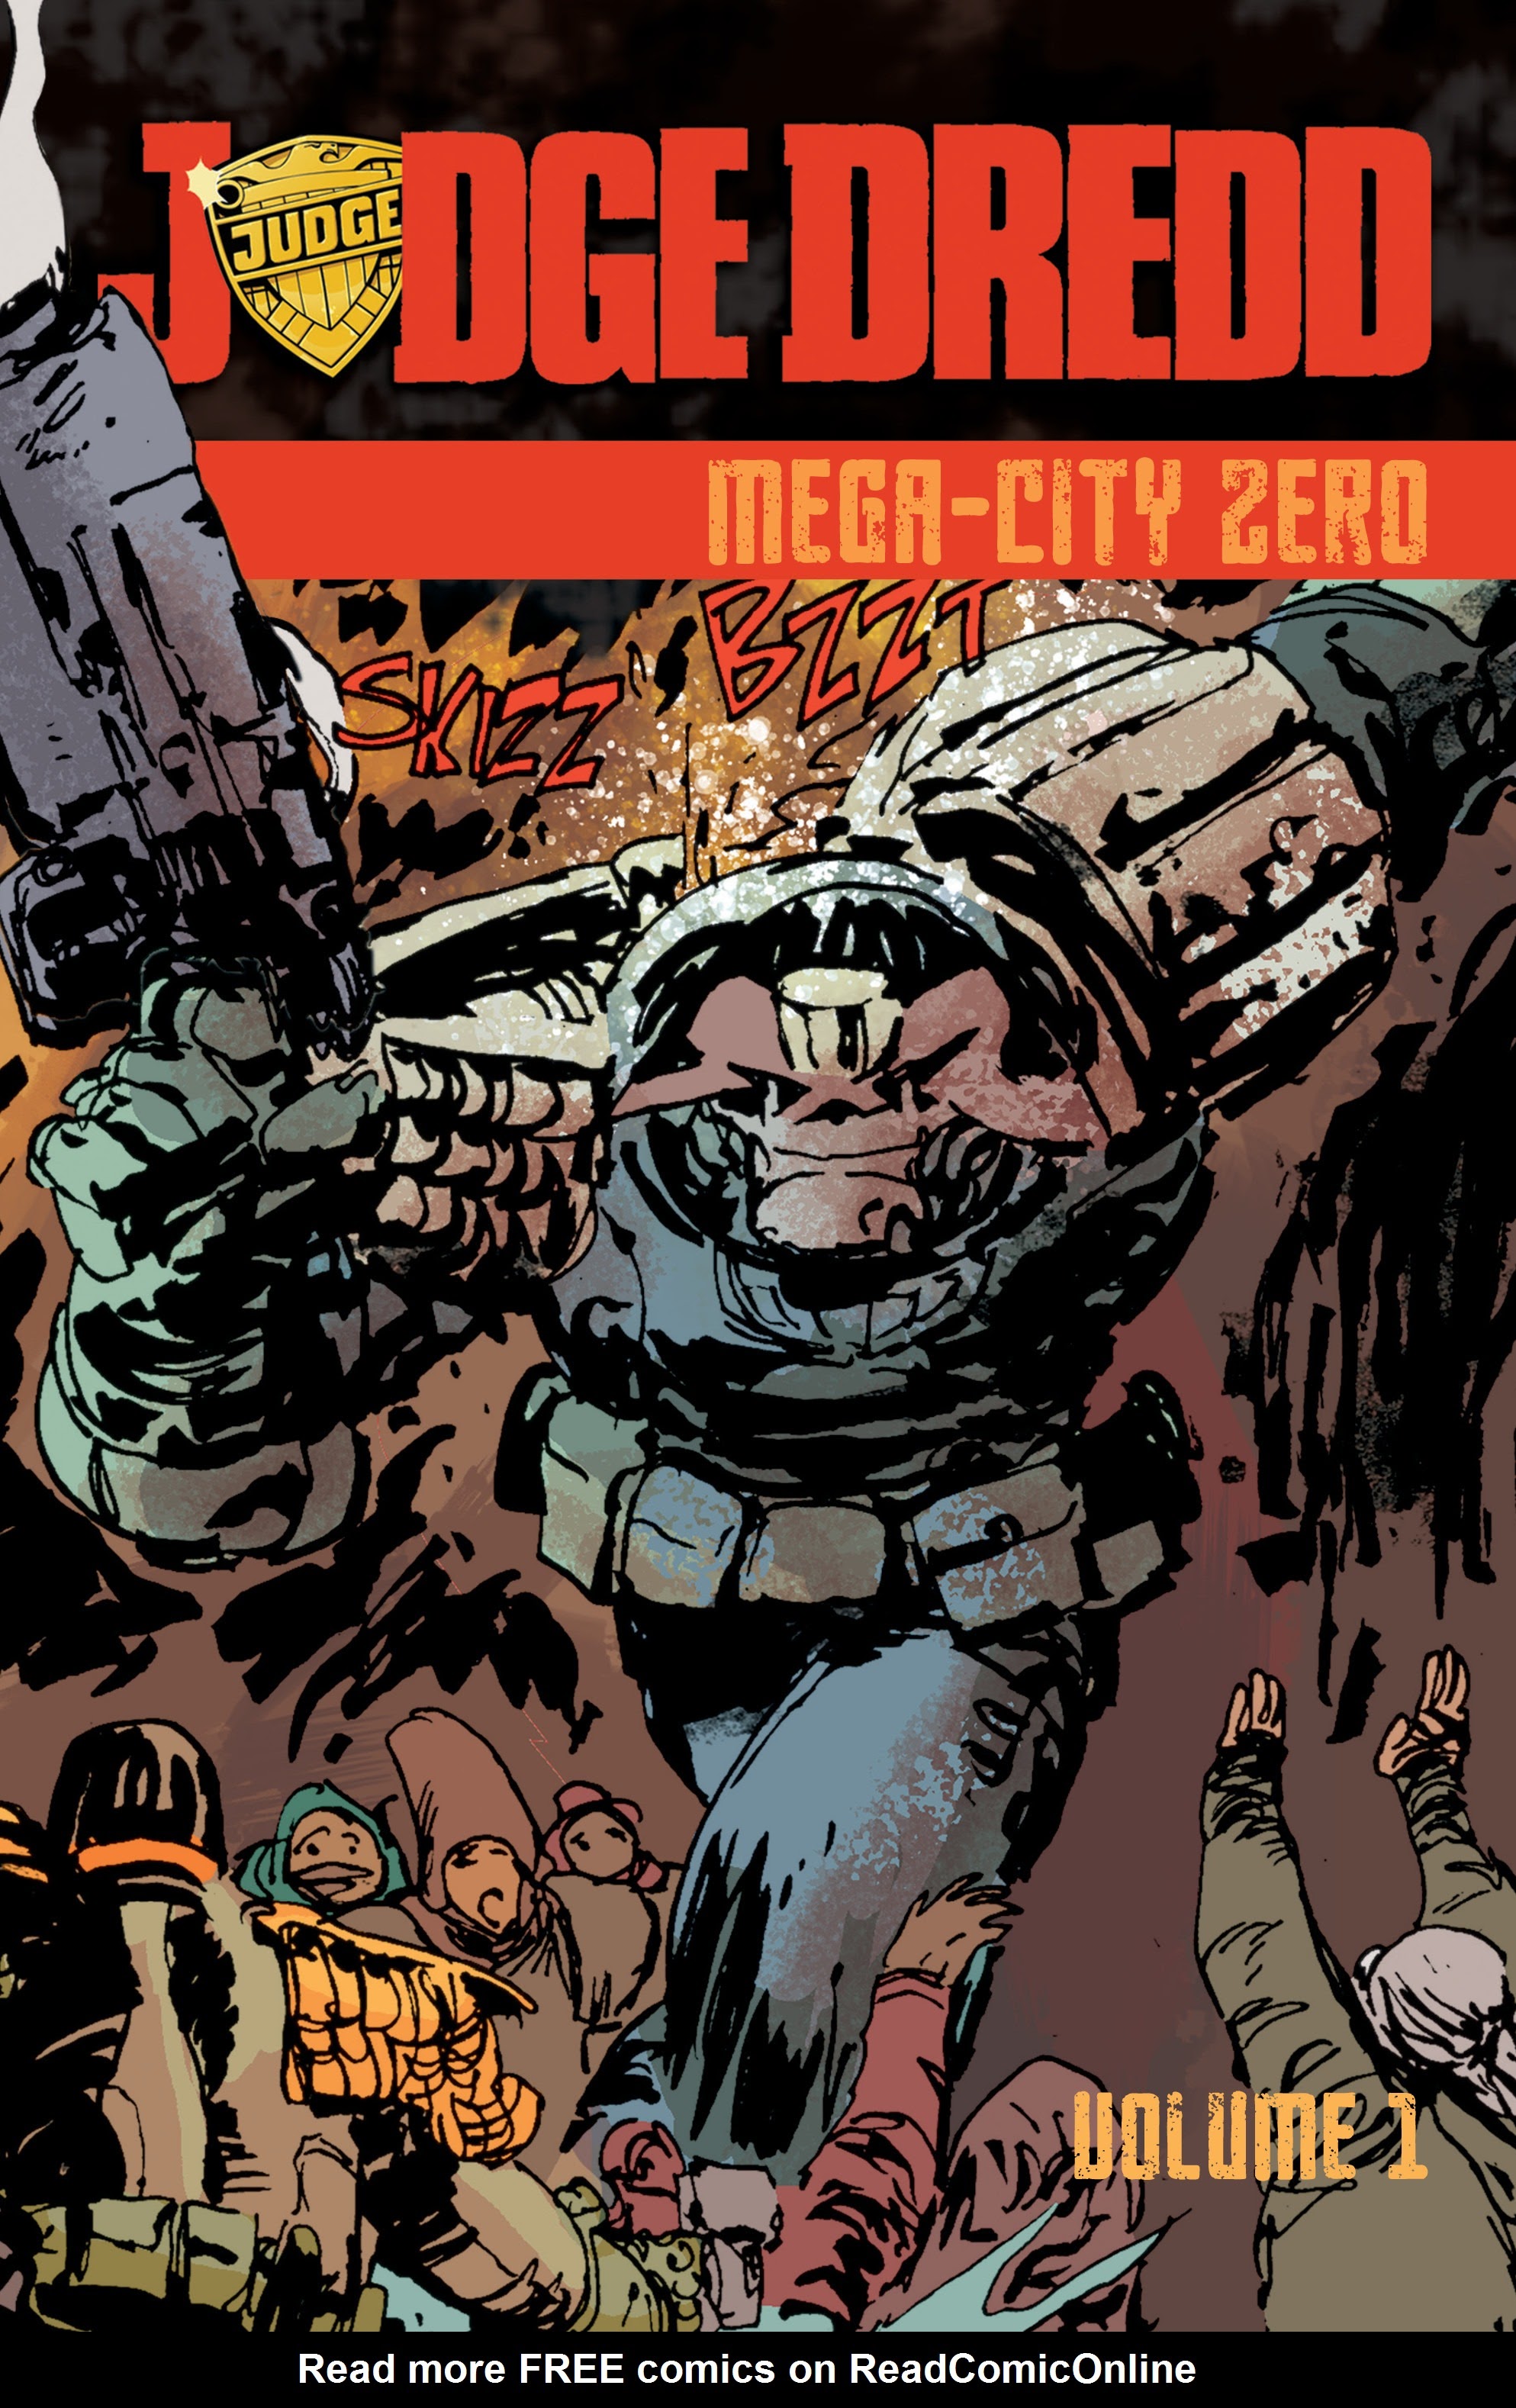 Read online Judge Dredd: Mega-City Zero comic -  Issue # TPB 1 - 2